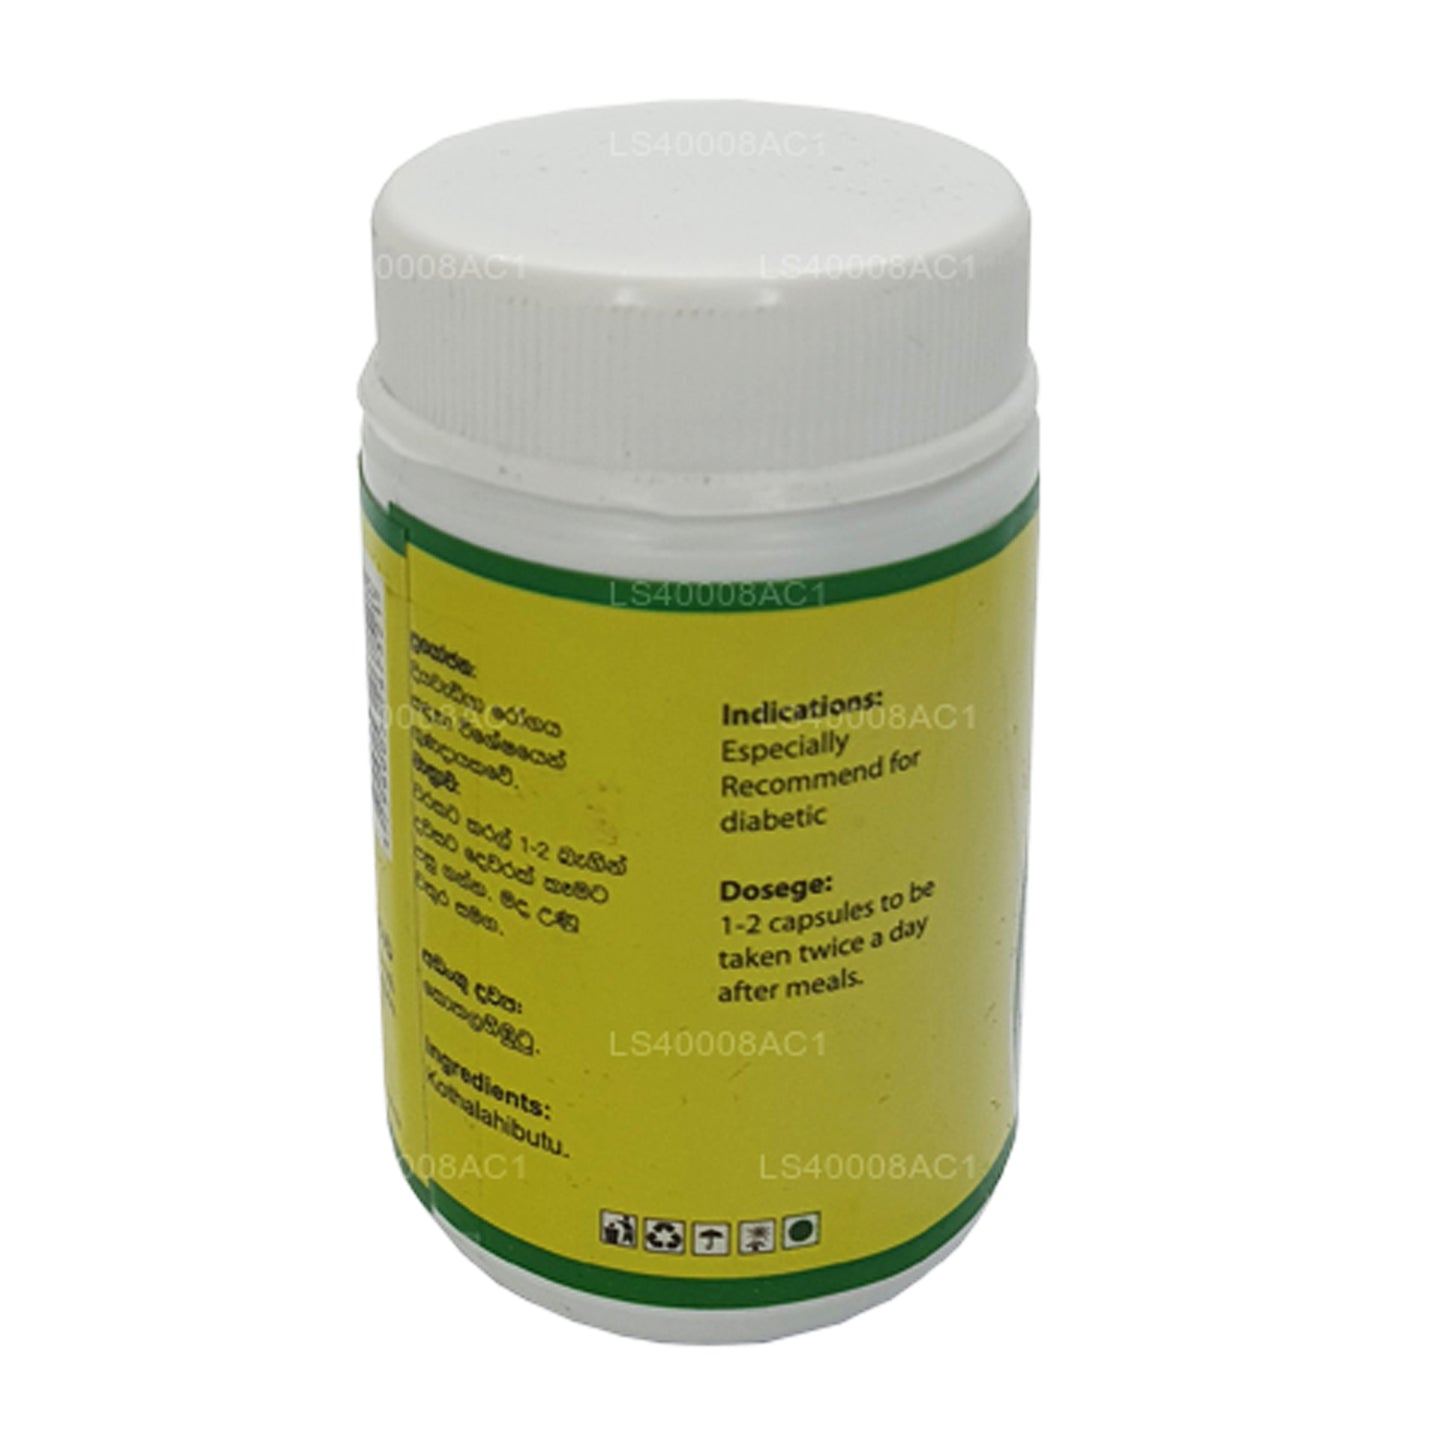 SLADC Kothala Himbutu (300 mg x 60 czapek)